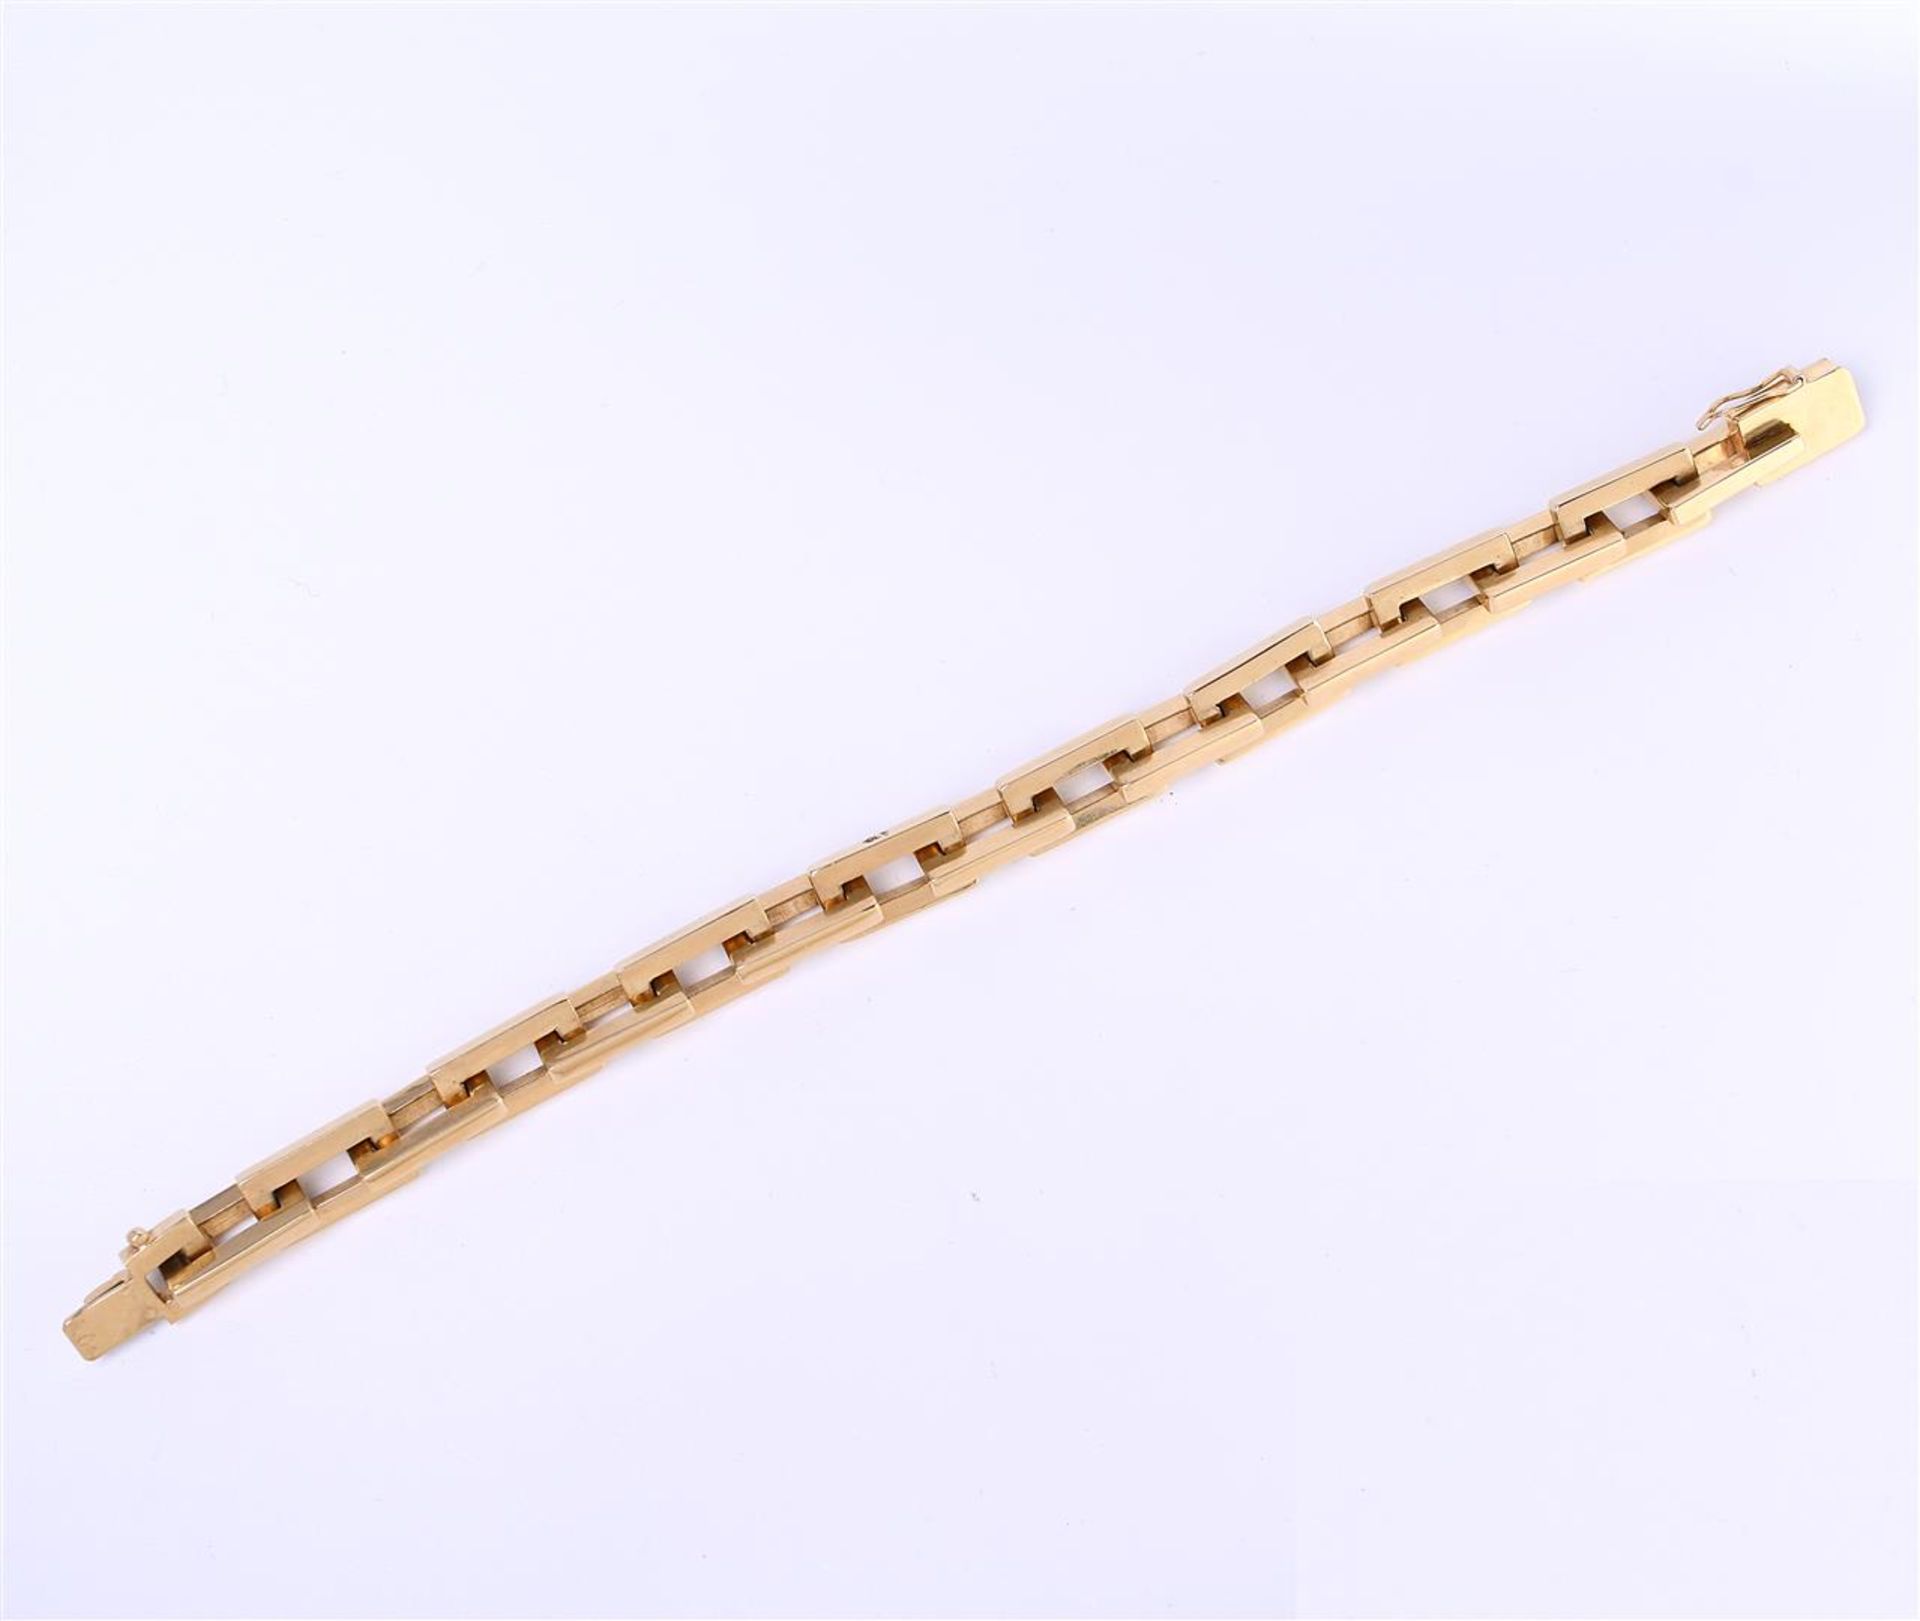 18 kt solid design bracelet with rectangular links. Total weight 30 grams